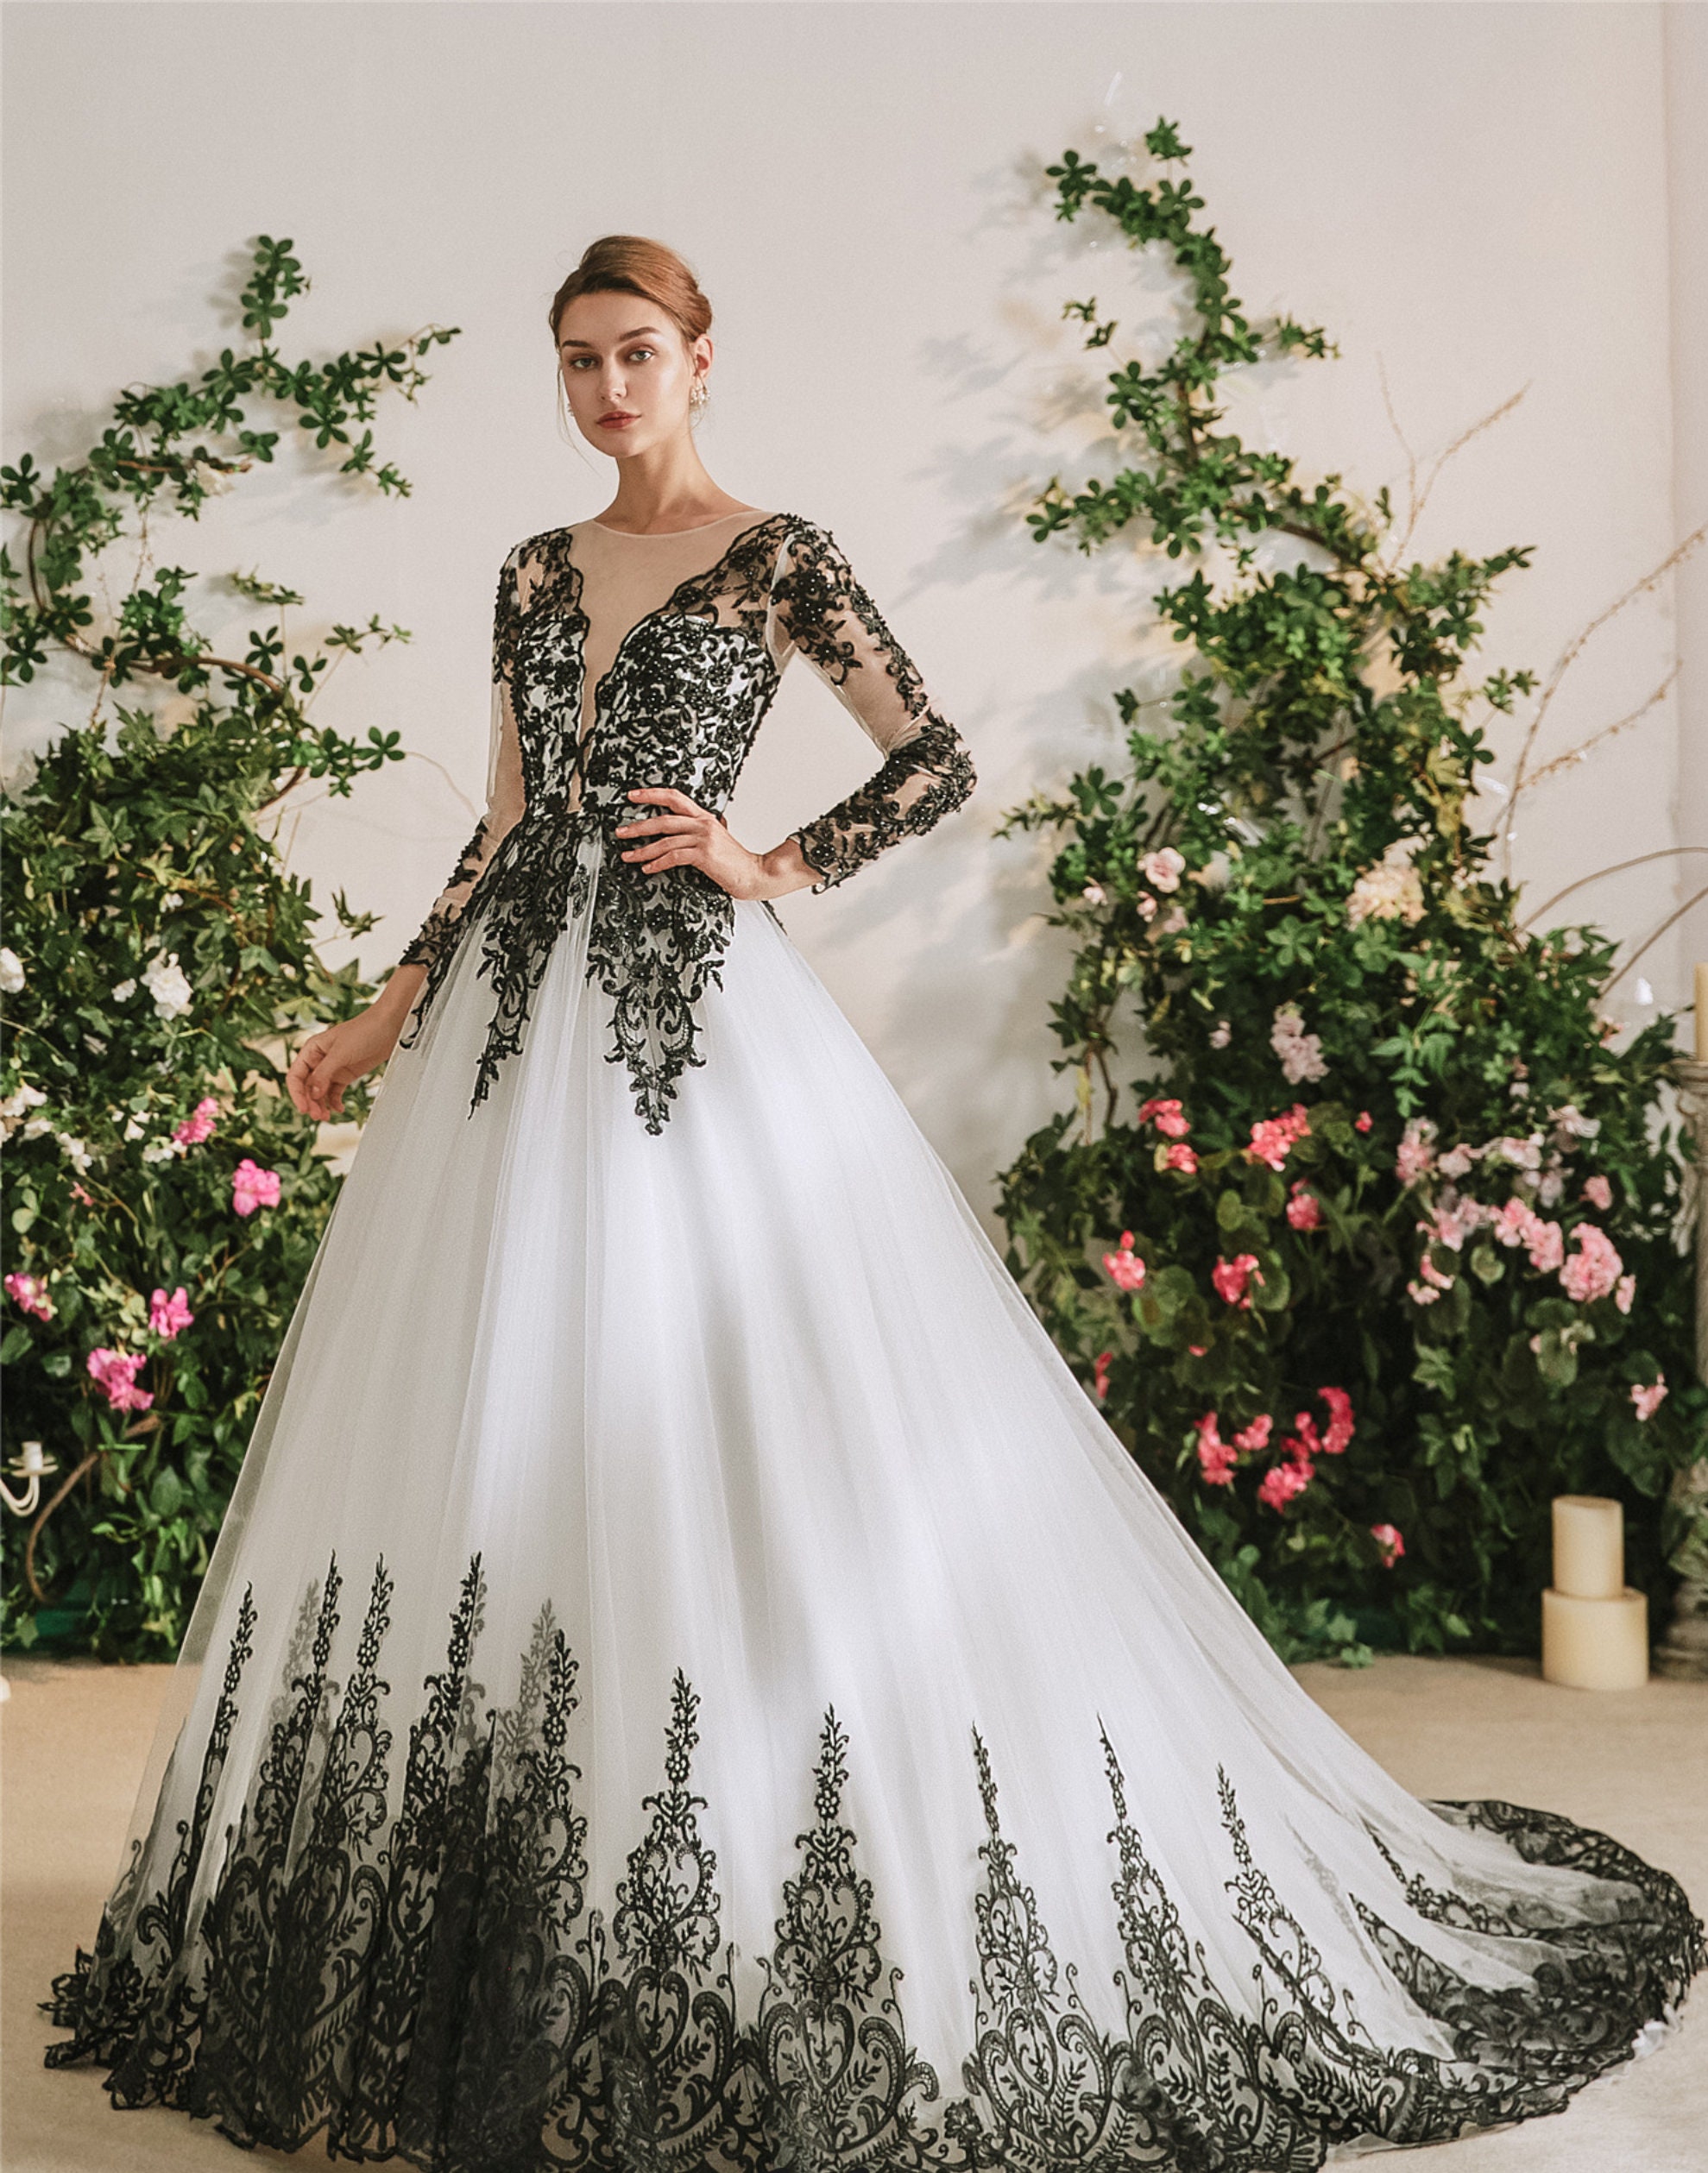 100+ Most Unique Dresses for Brides & Special Occasions - Promfy